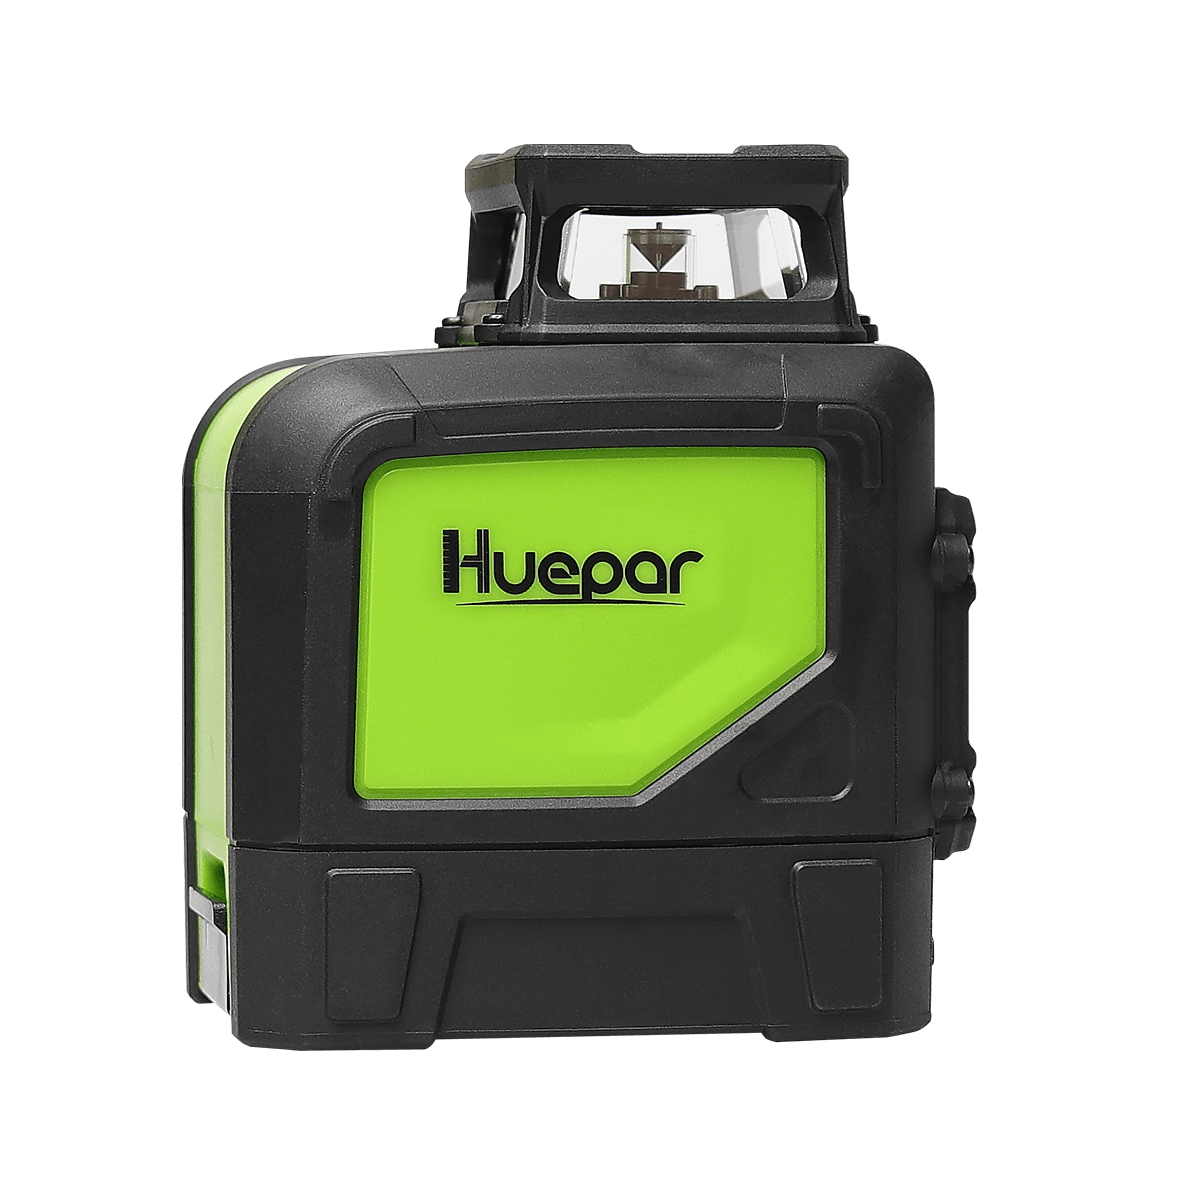 HUEPAR 901CG HUEPAR EU - Laser Level